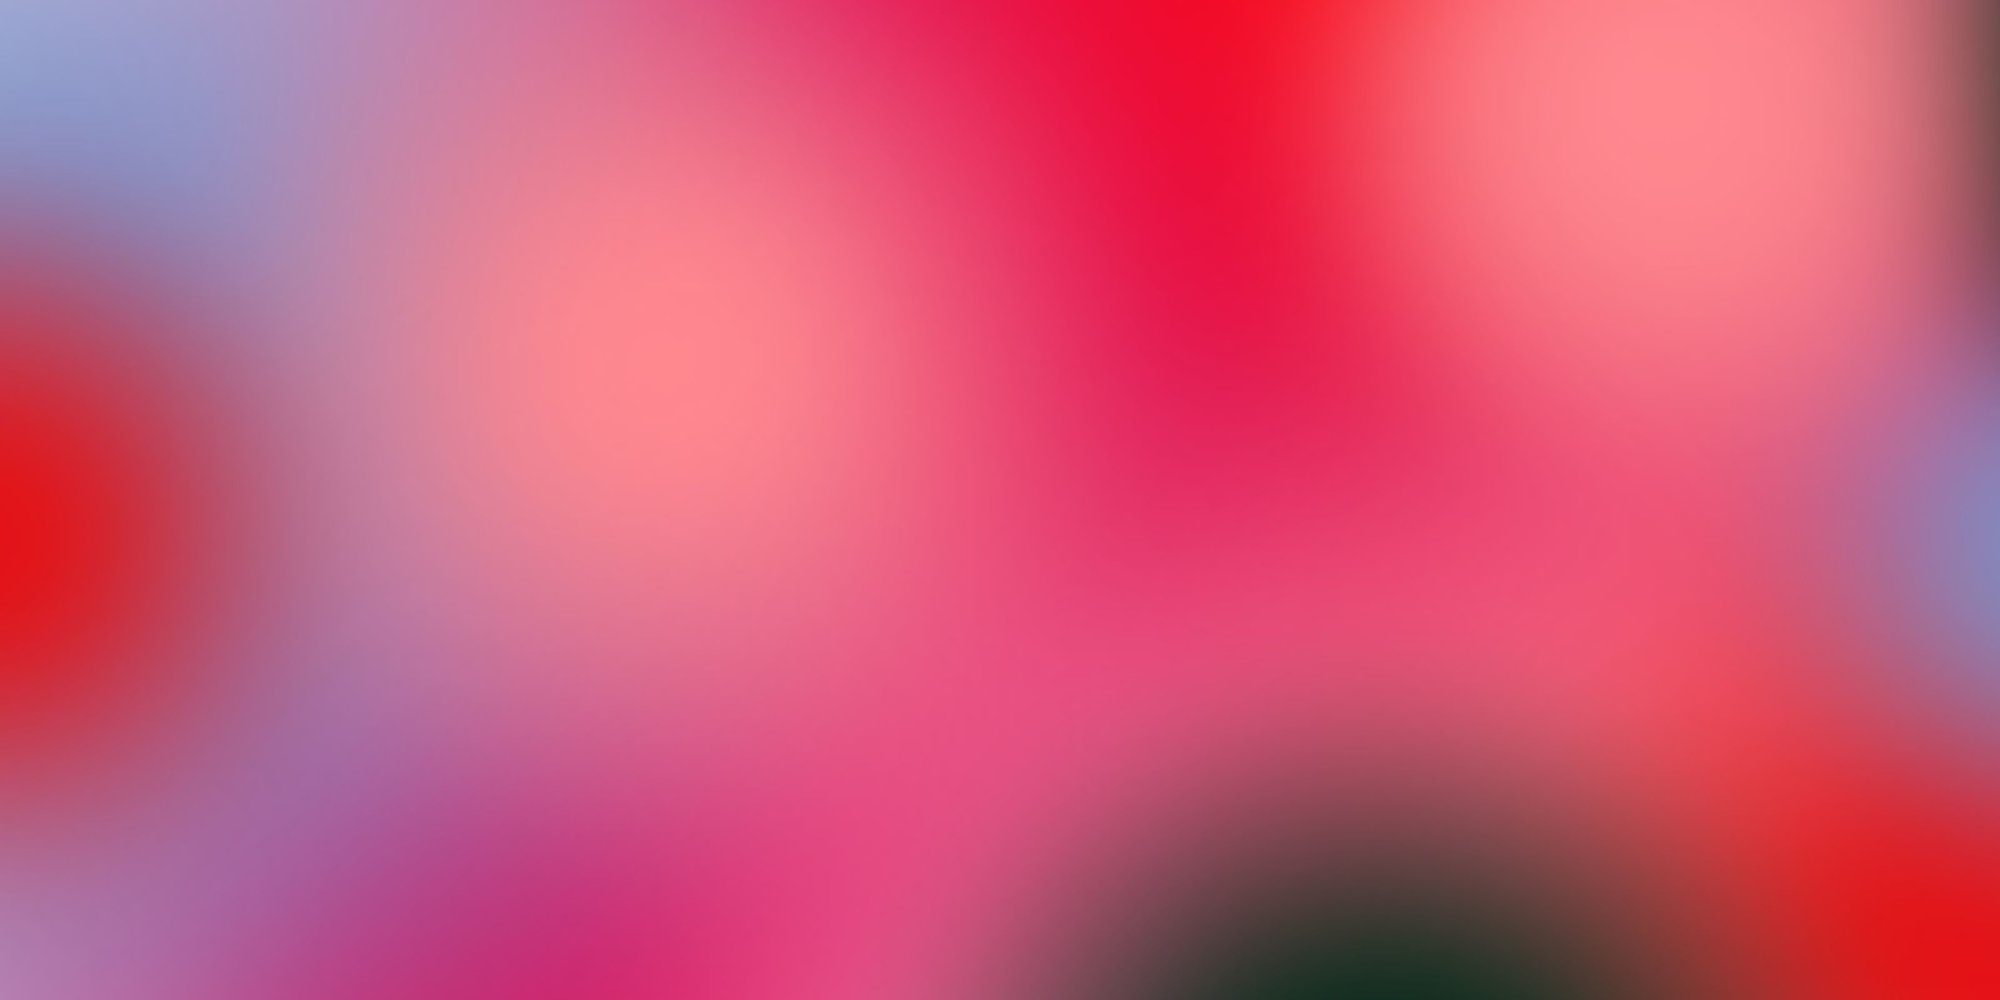 Pax Delta 8 THC blurred colors